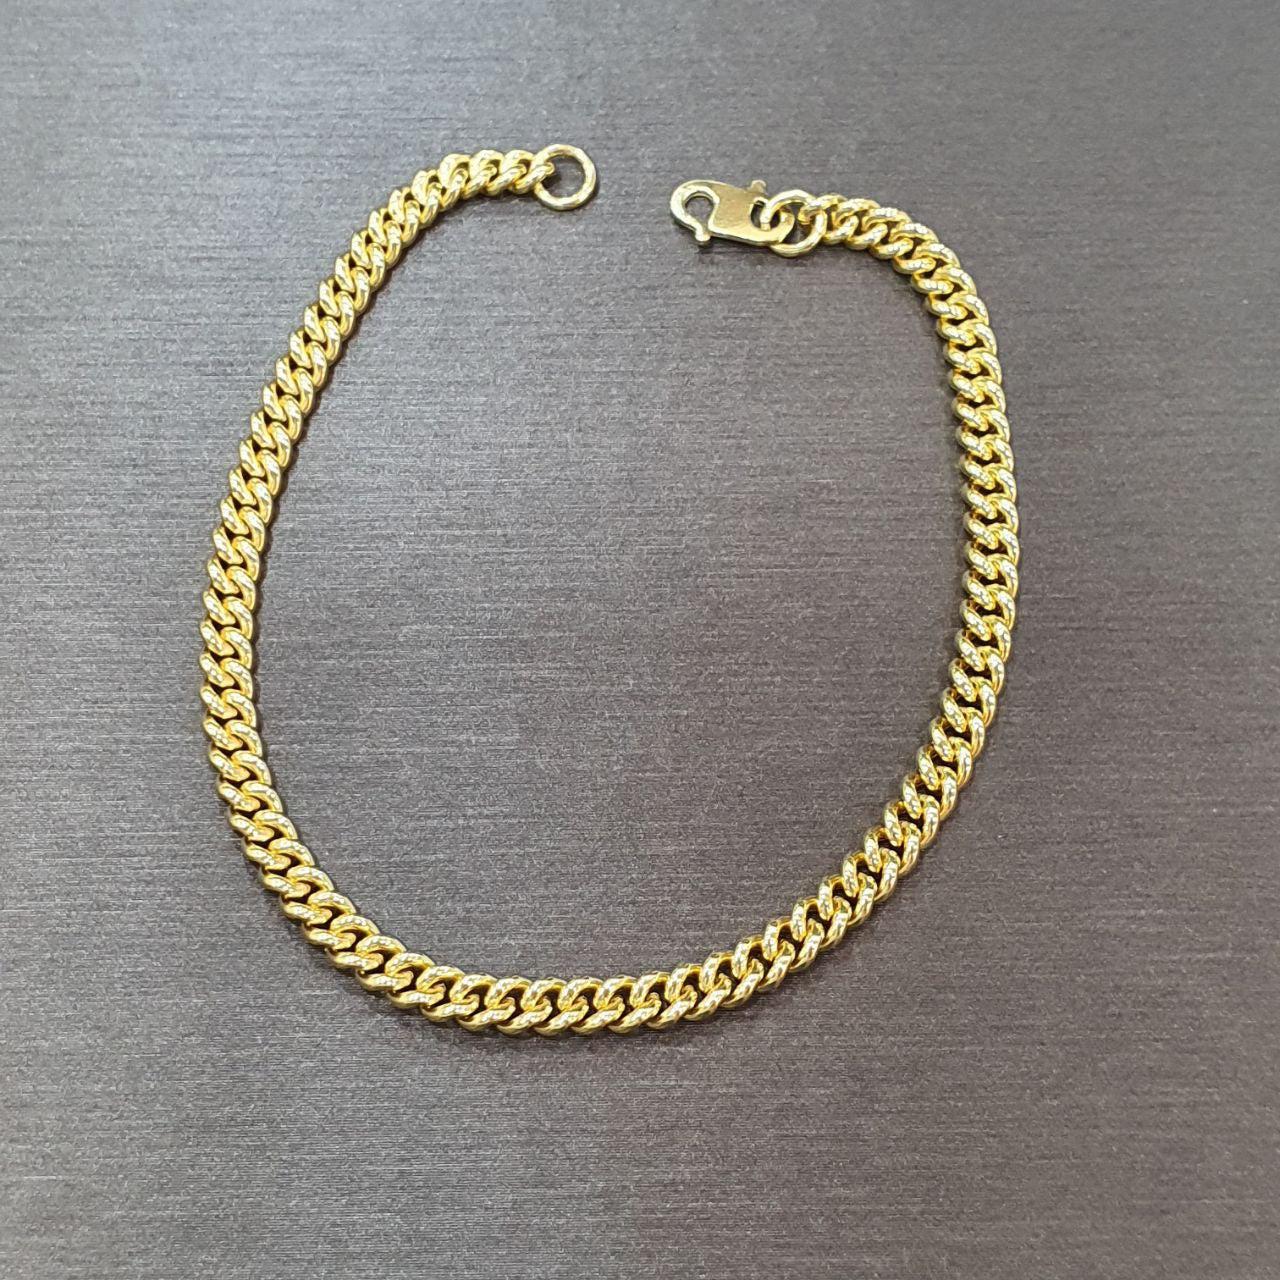 22k / 916 gold hollow Fish bone Bracelet by Best Gold Shop-Bracelets-Best Gold Shop